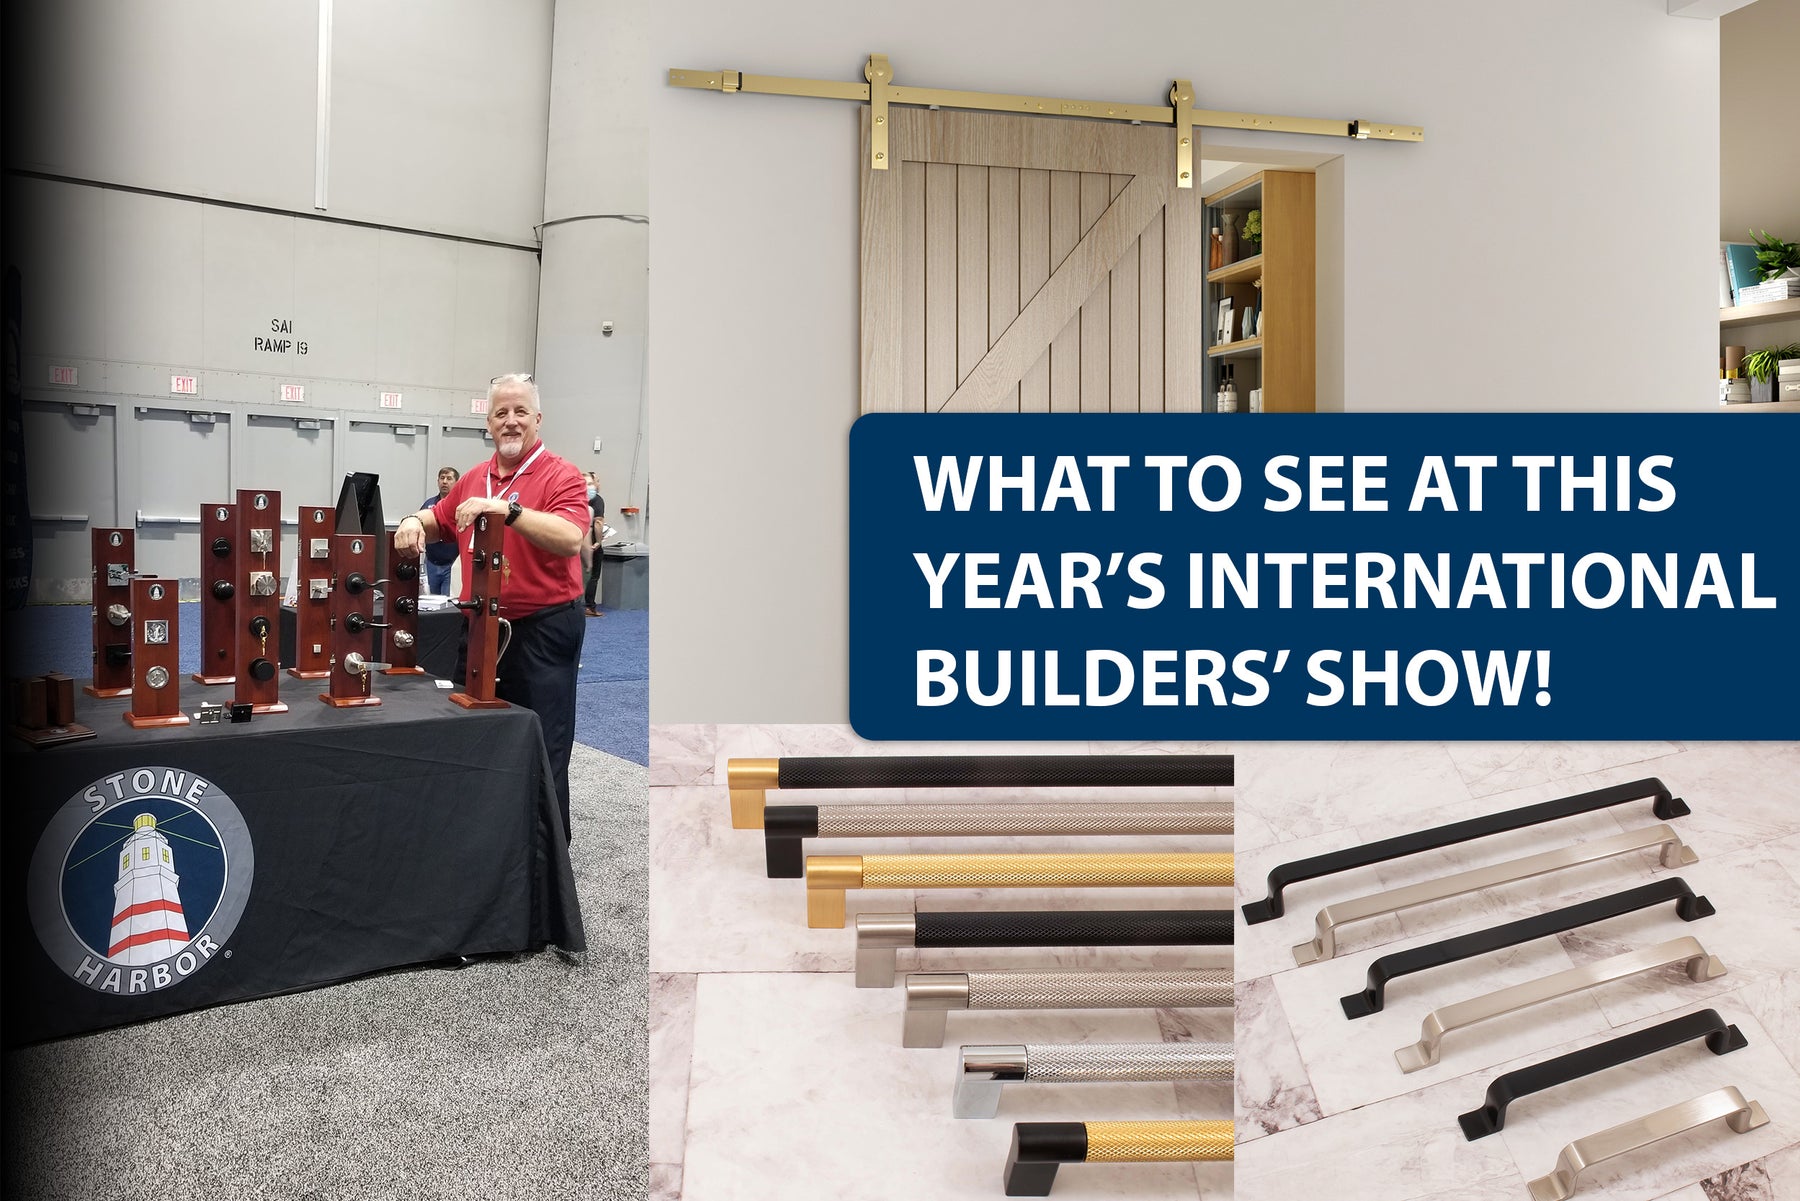 Visit Stone Harbor Hardware at the NAHB International Builders’ Show